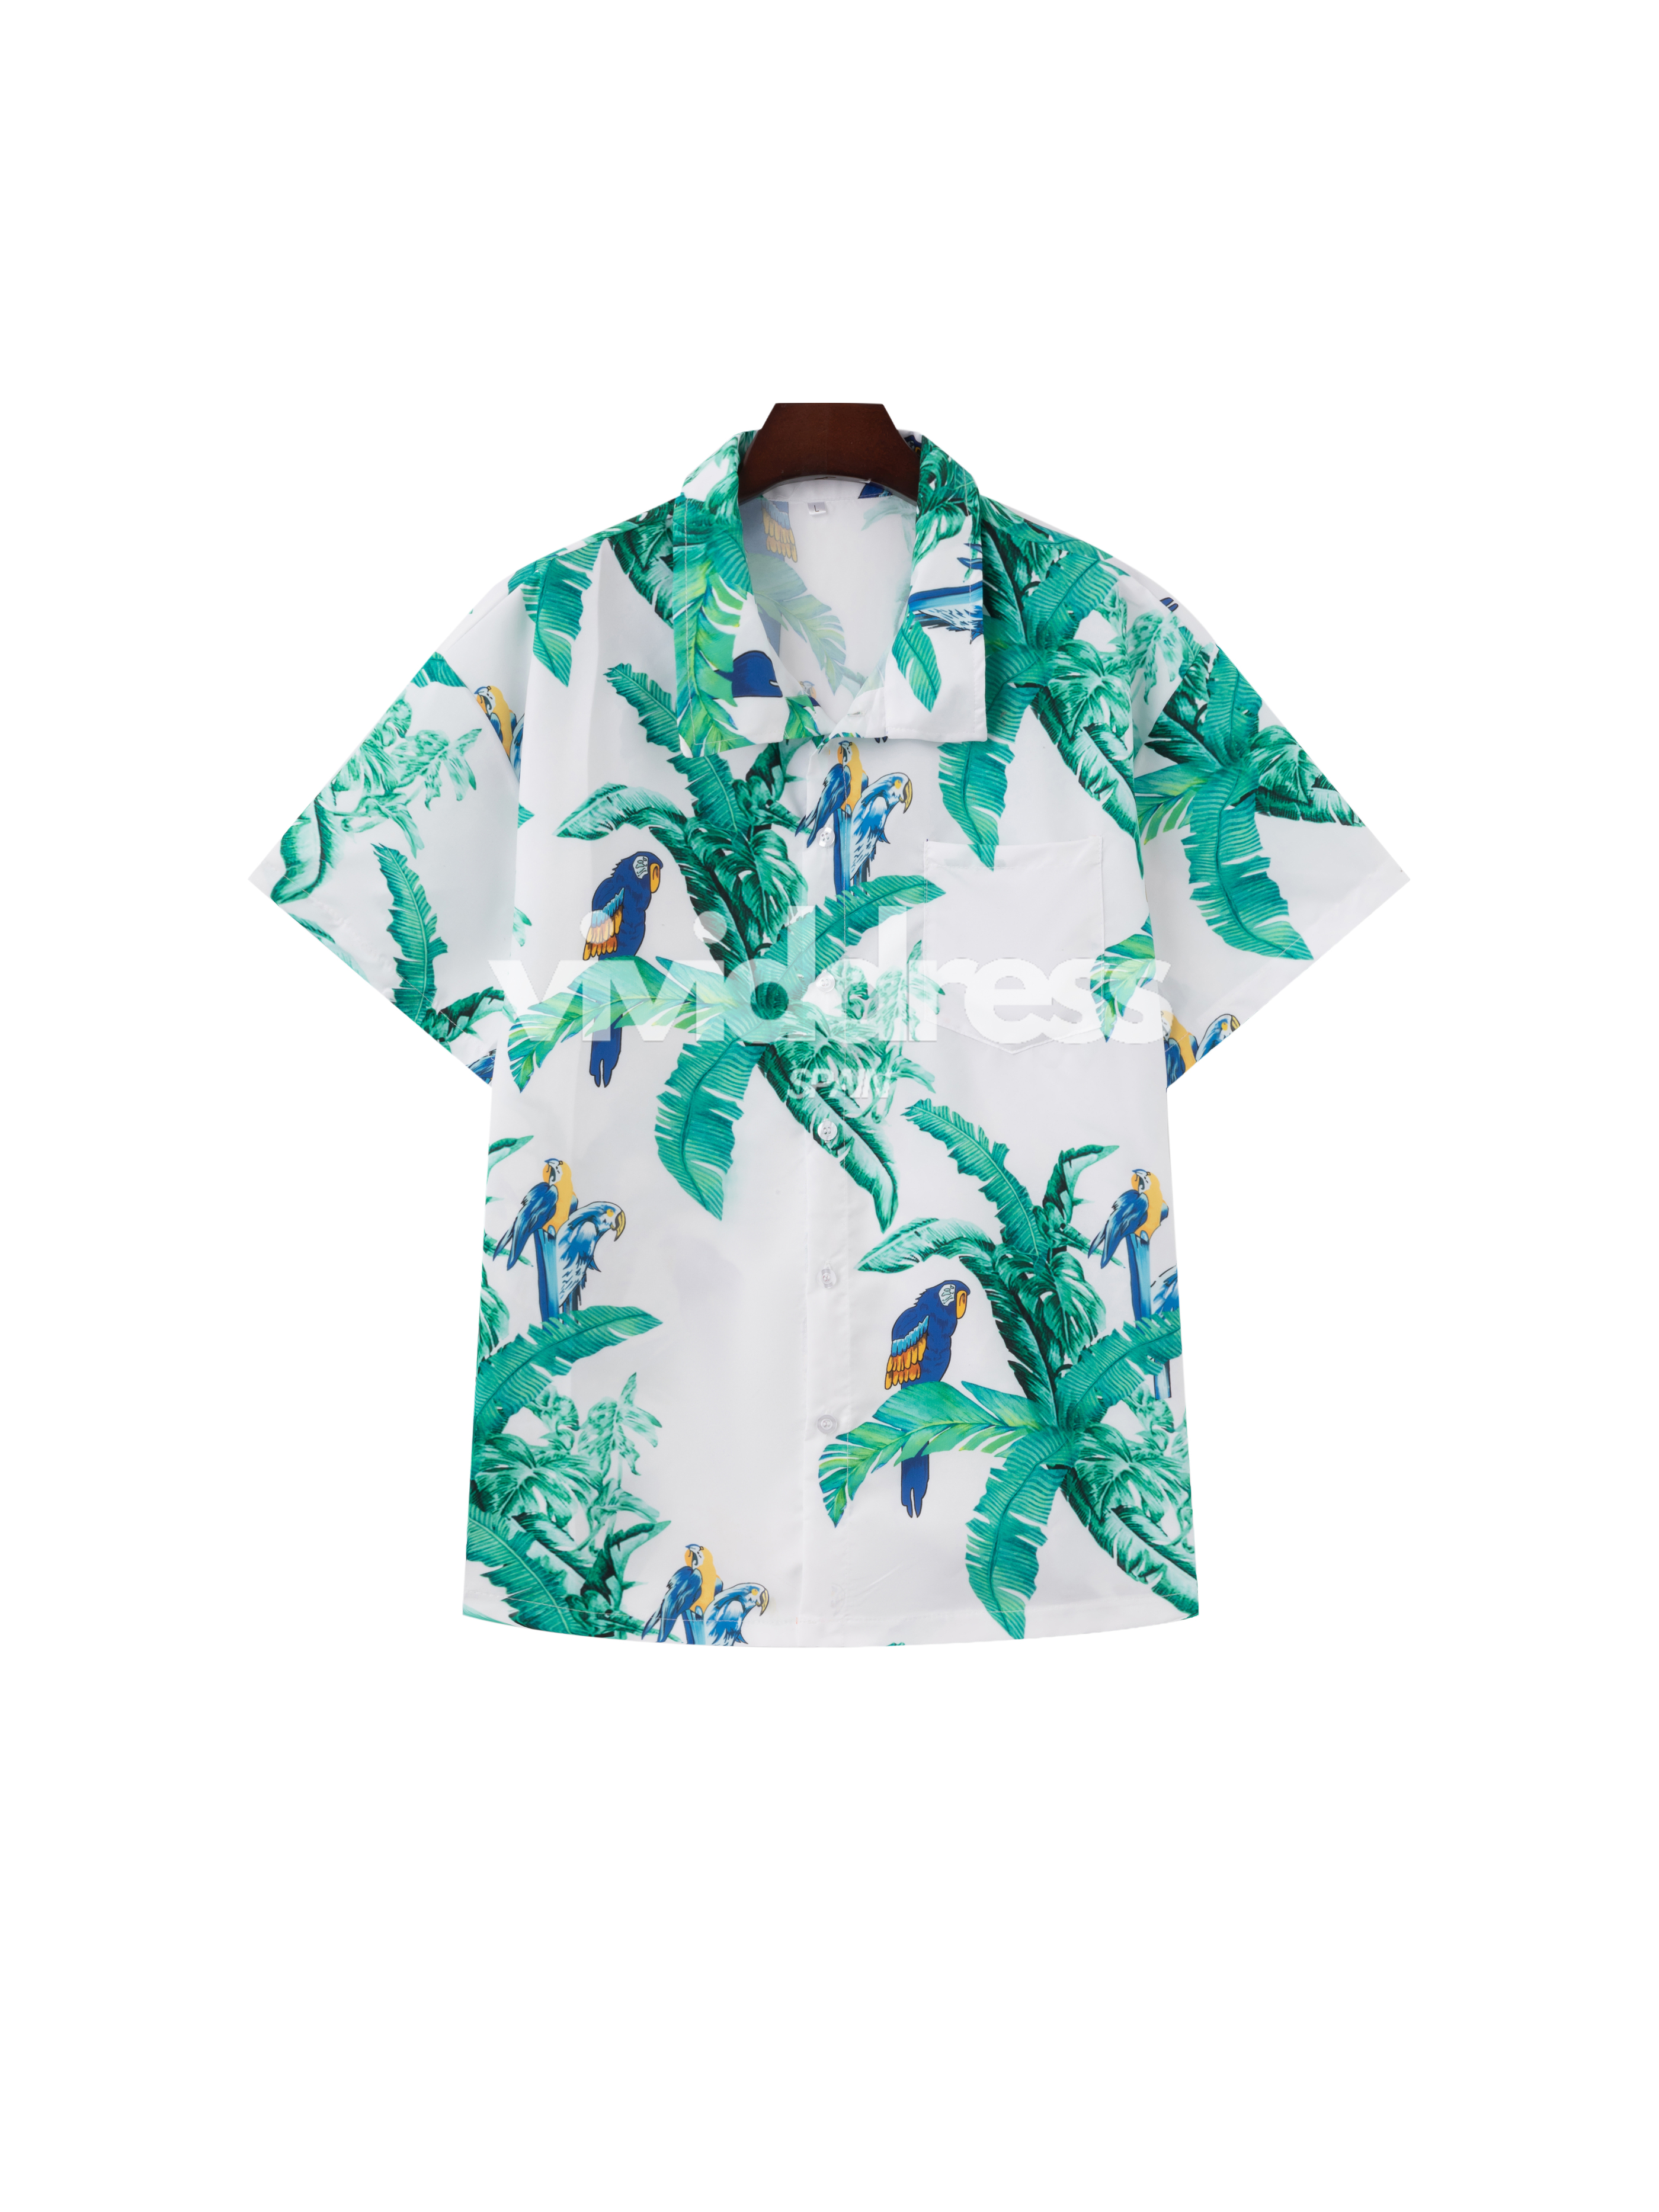 Men's Parrot Print Beach Hawaiian Holiday Short Sleeve Shirt